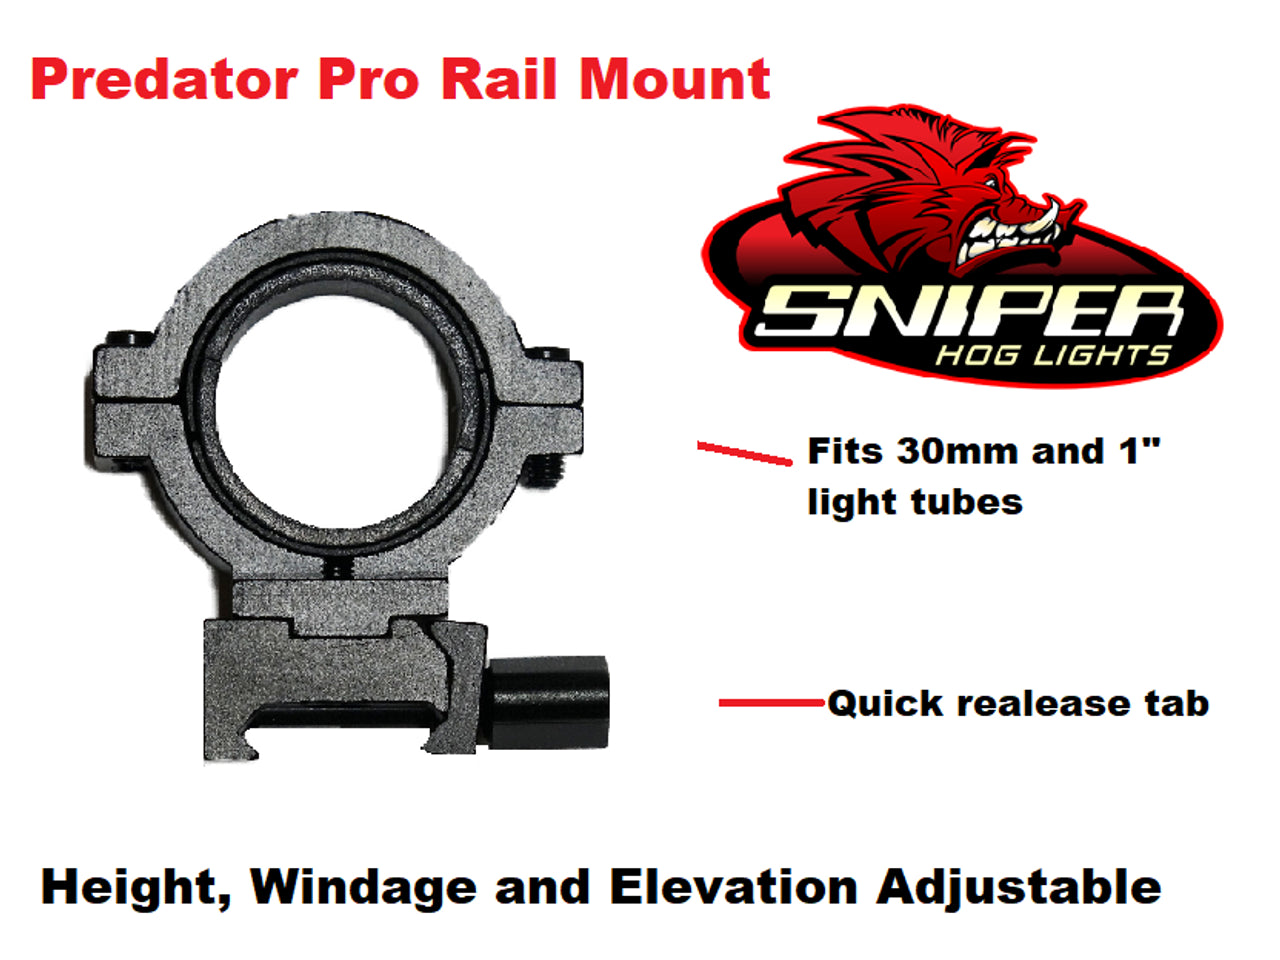 Sniper Hog lights Predator Pro Rail Mount